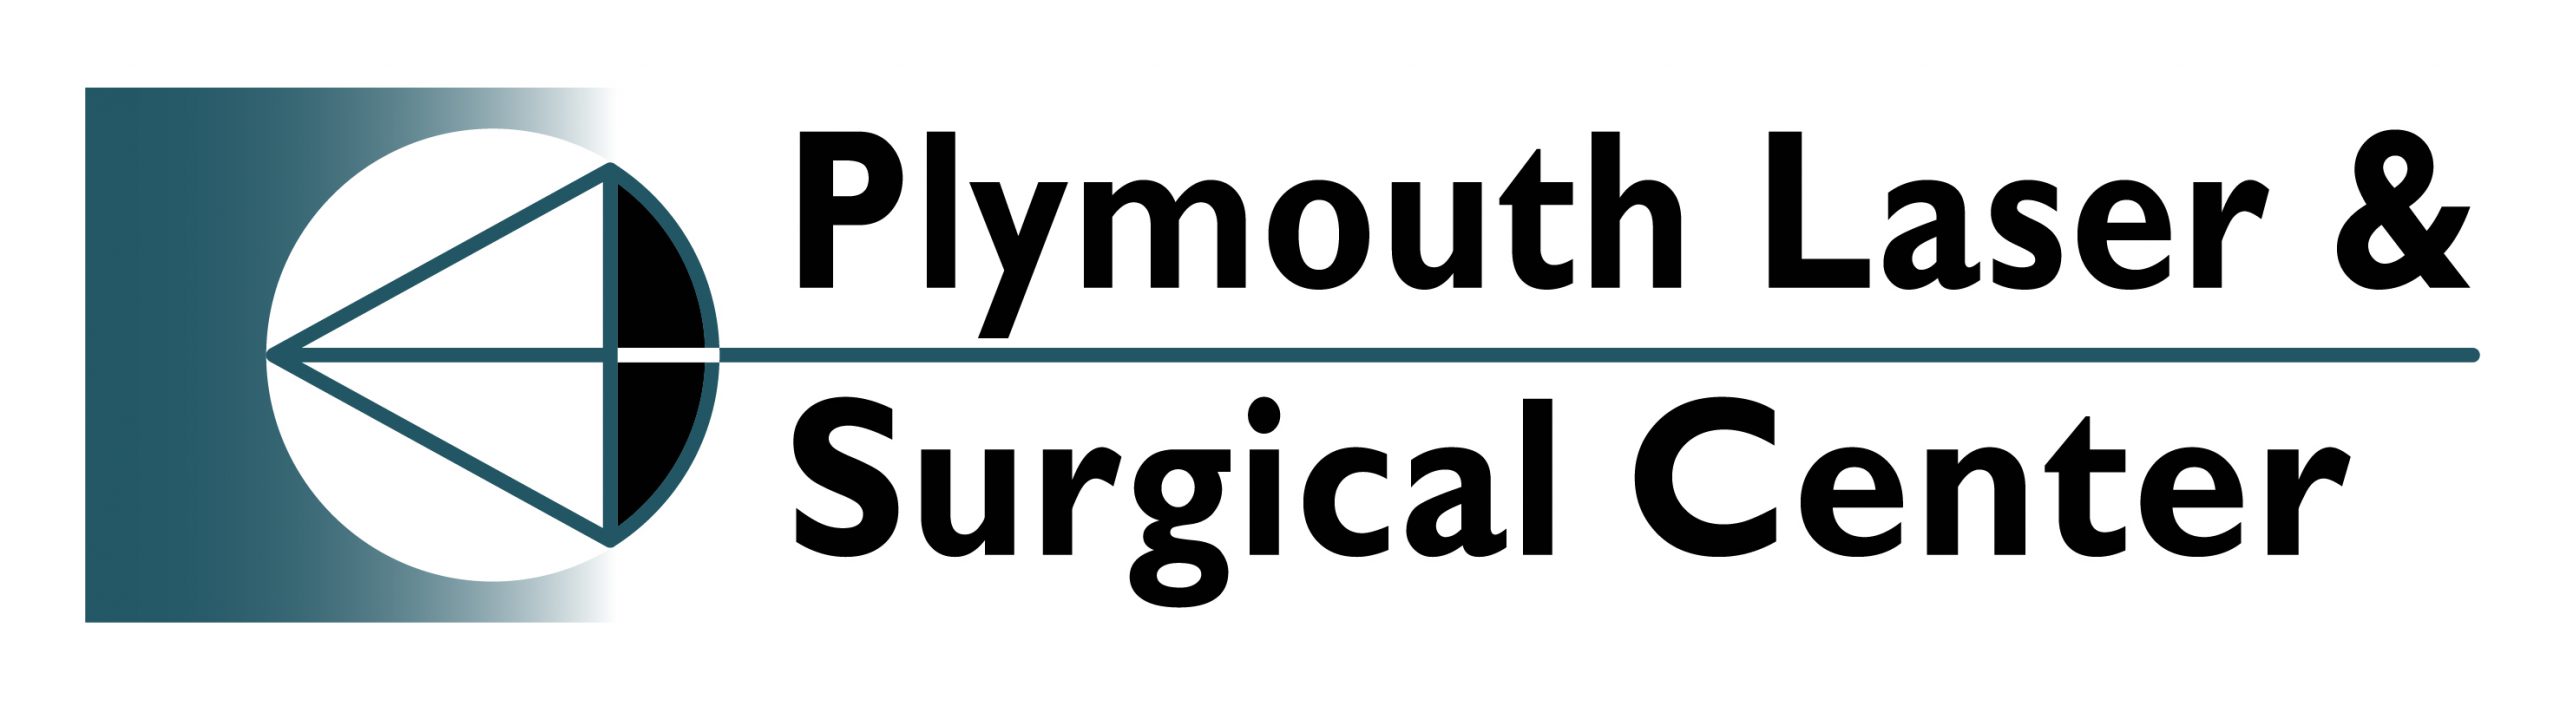 Plymouth Laser & Surgical Center Logo-color-01